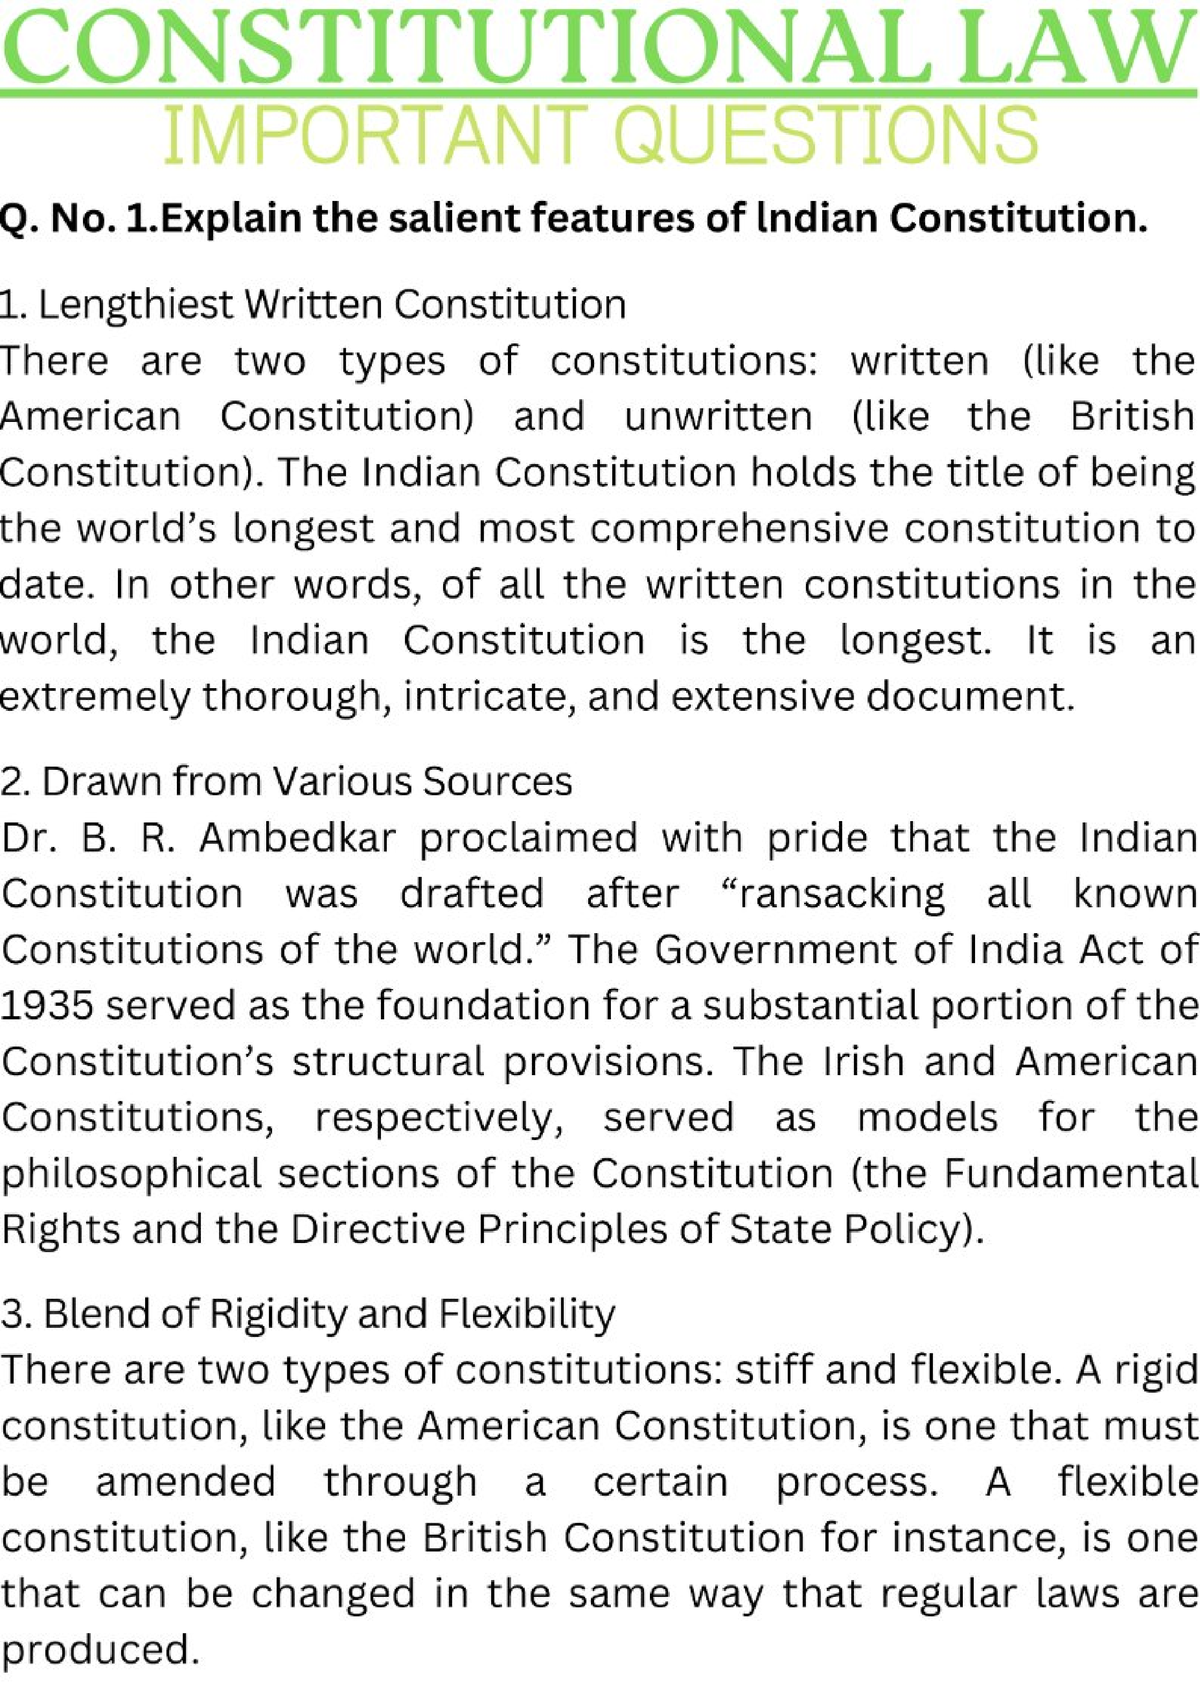 constitutional law phd topics